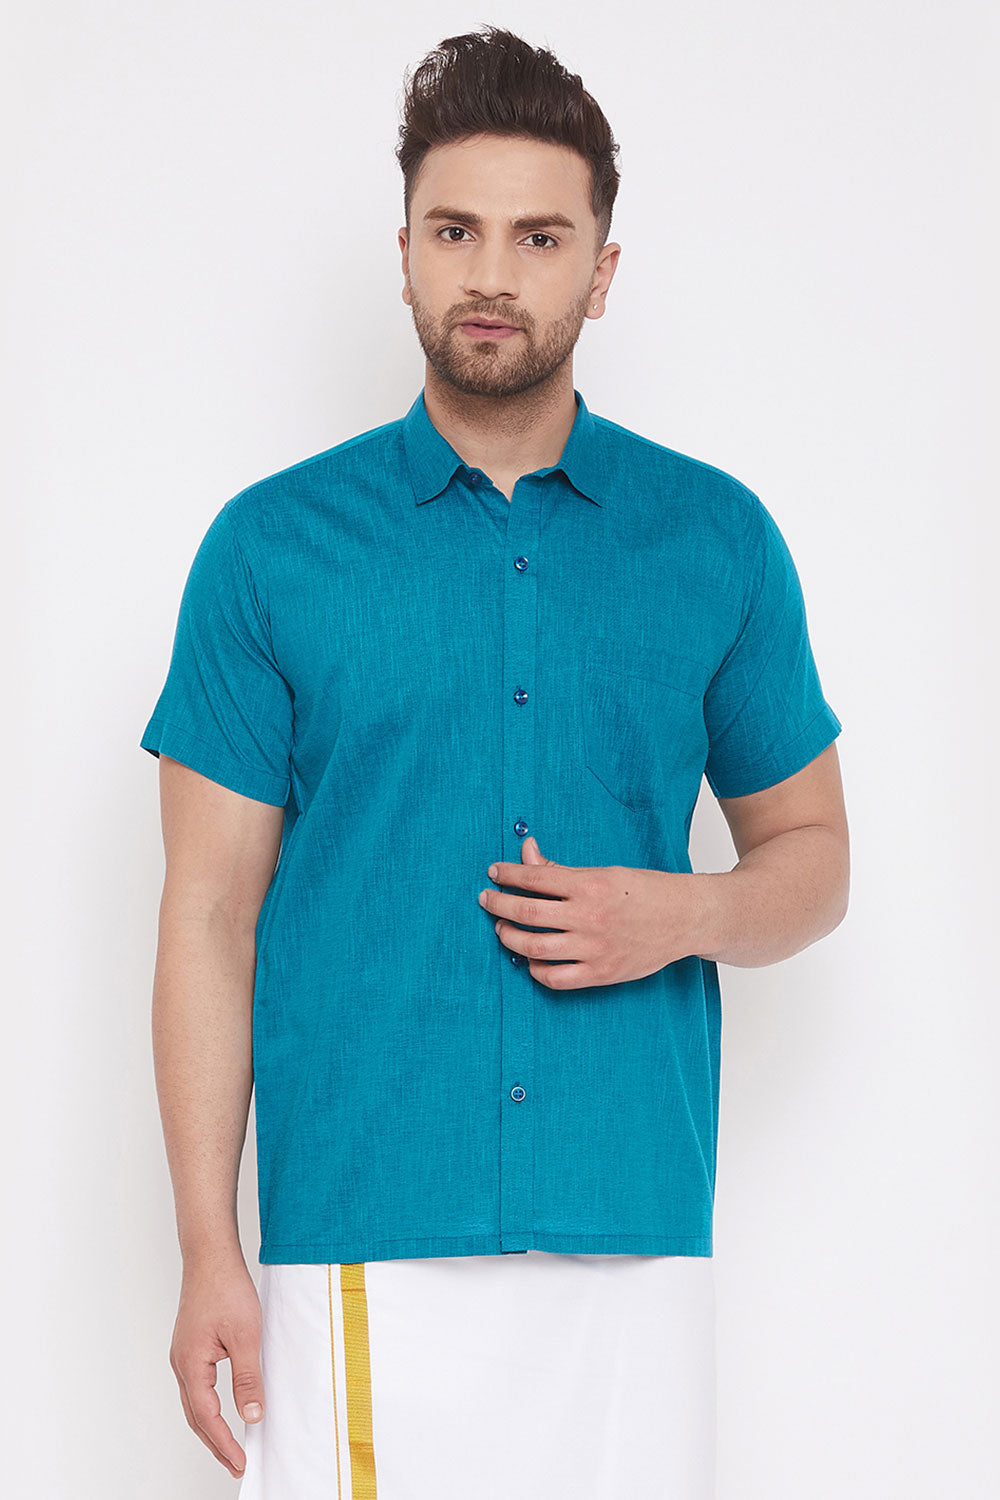 Turquoise Blended Cotton Shirt for Men's